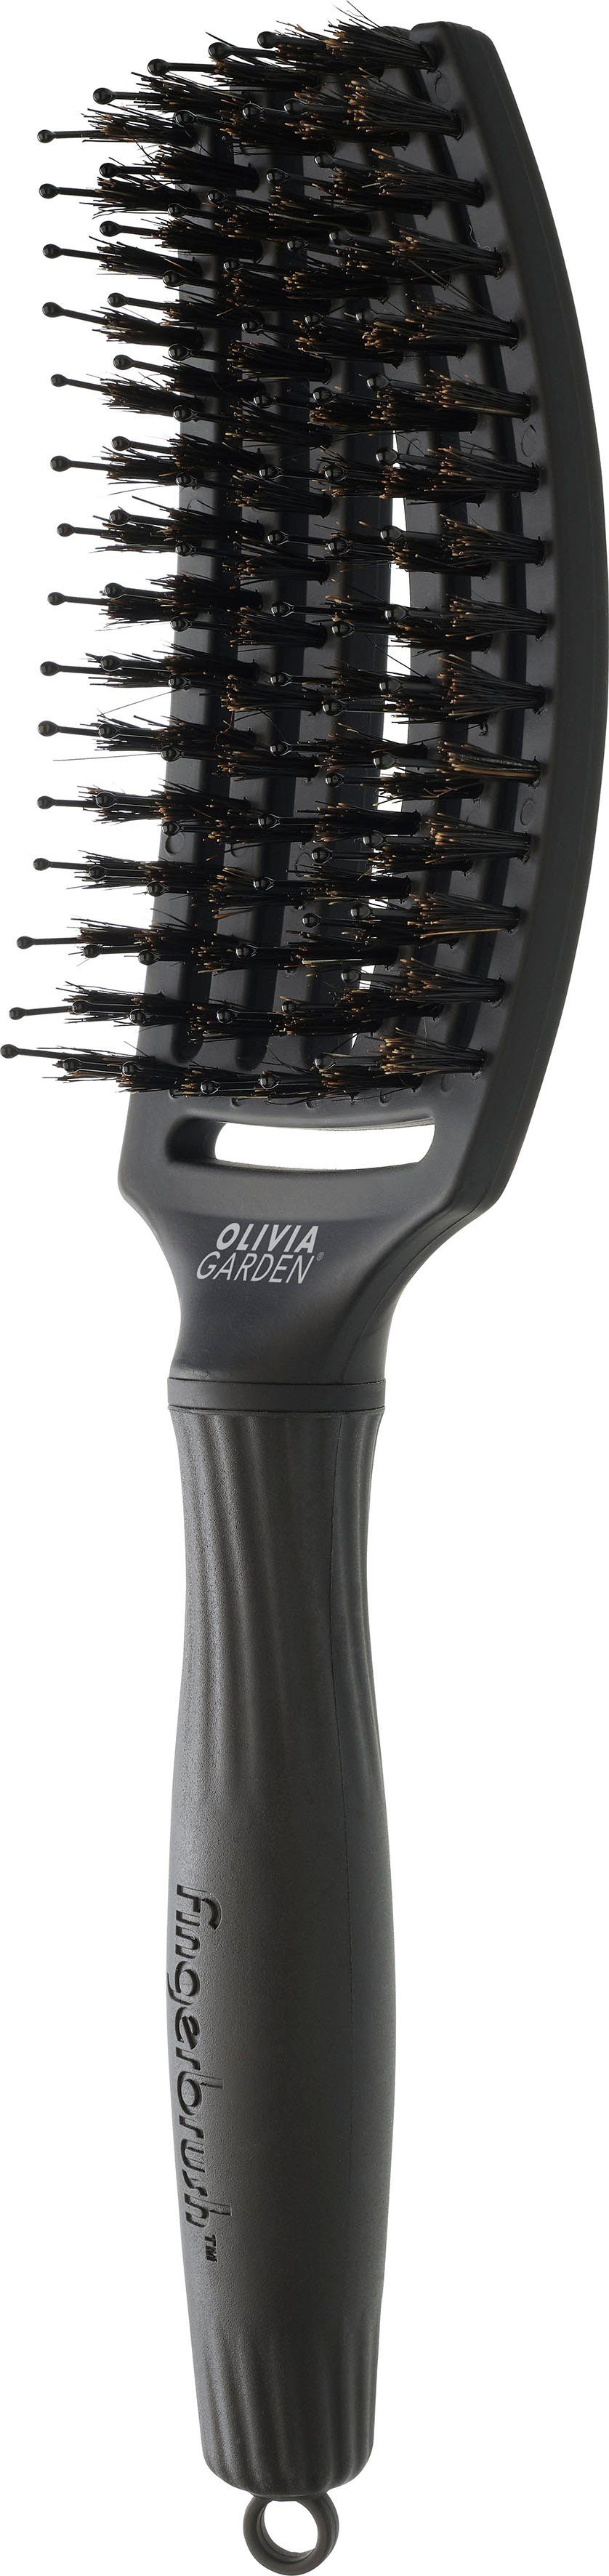 Fingerbrush OLIVIA GARDEN Combo Medium Haarbürste